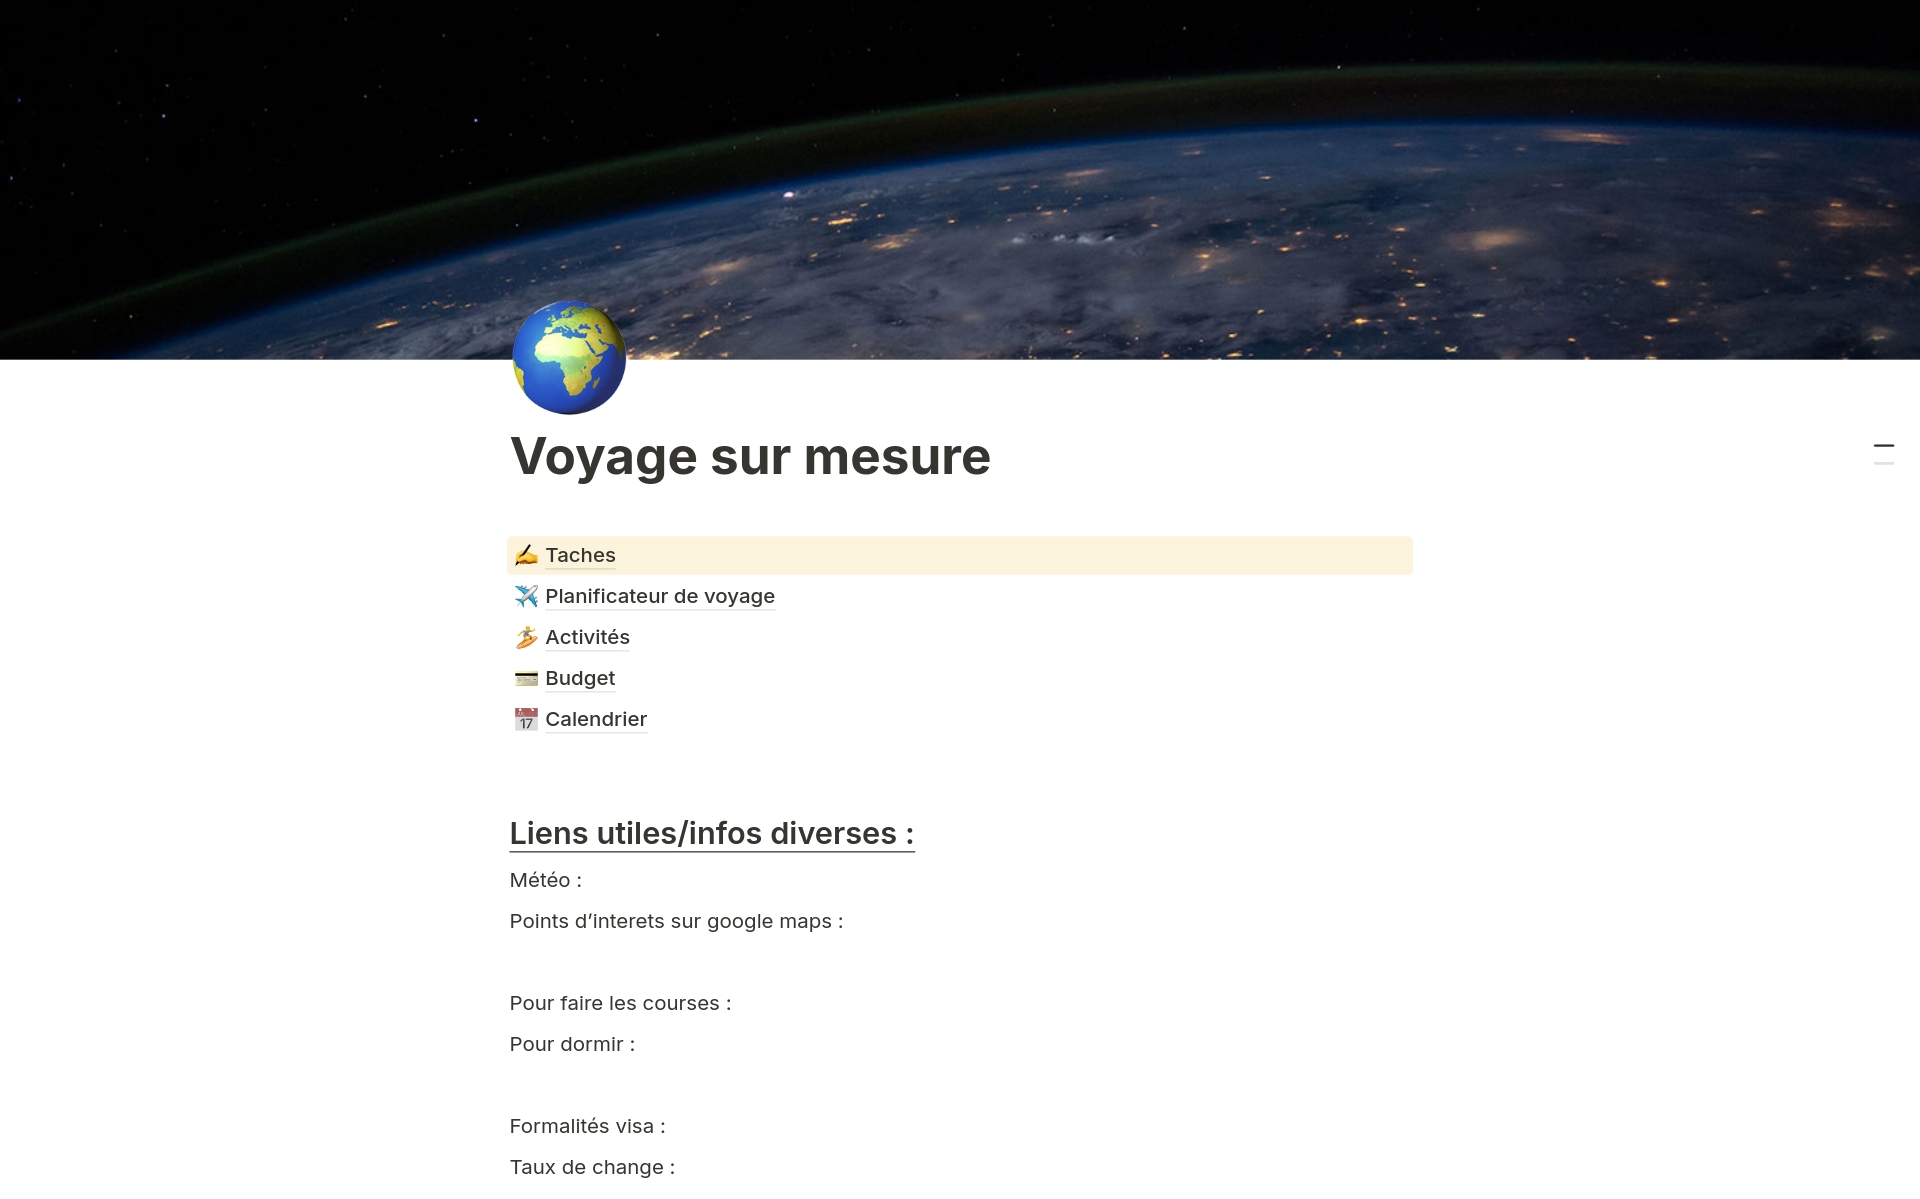 A template preview for Voyage sur mesure